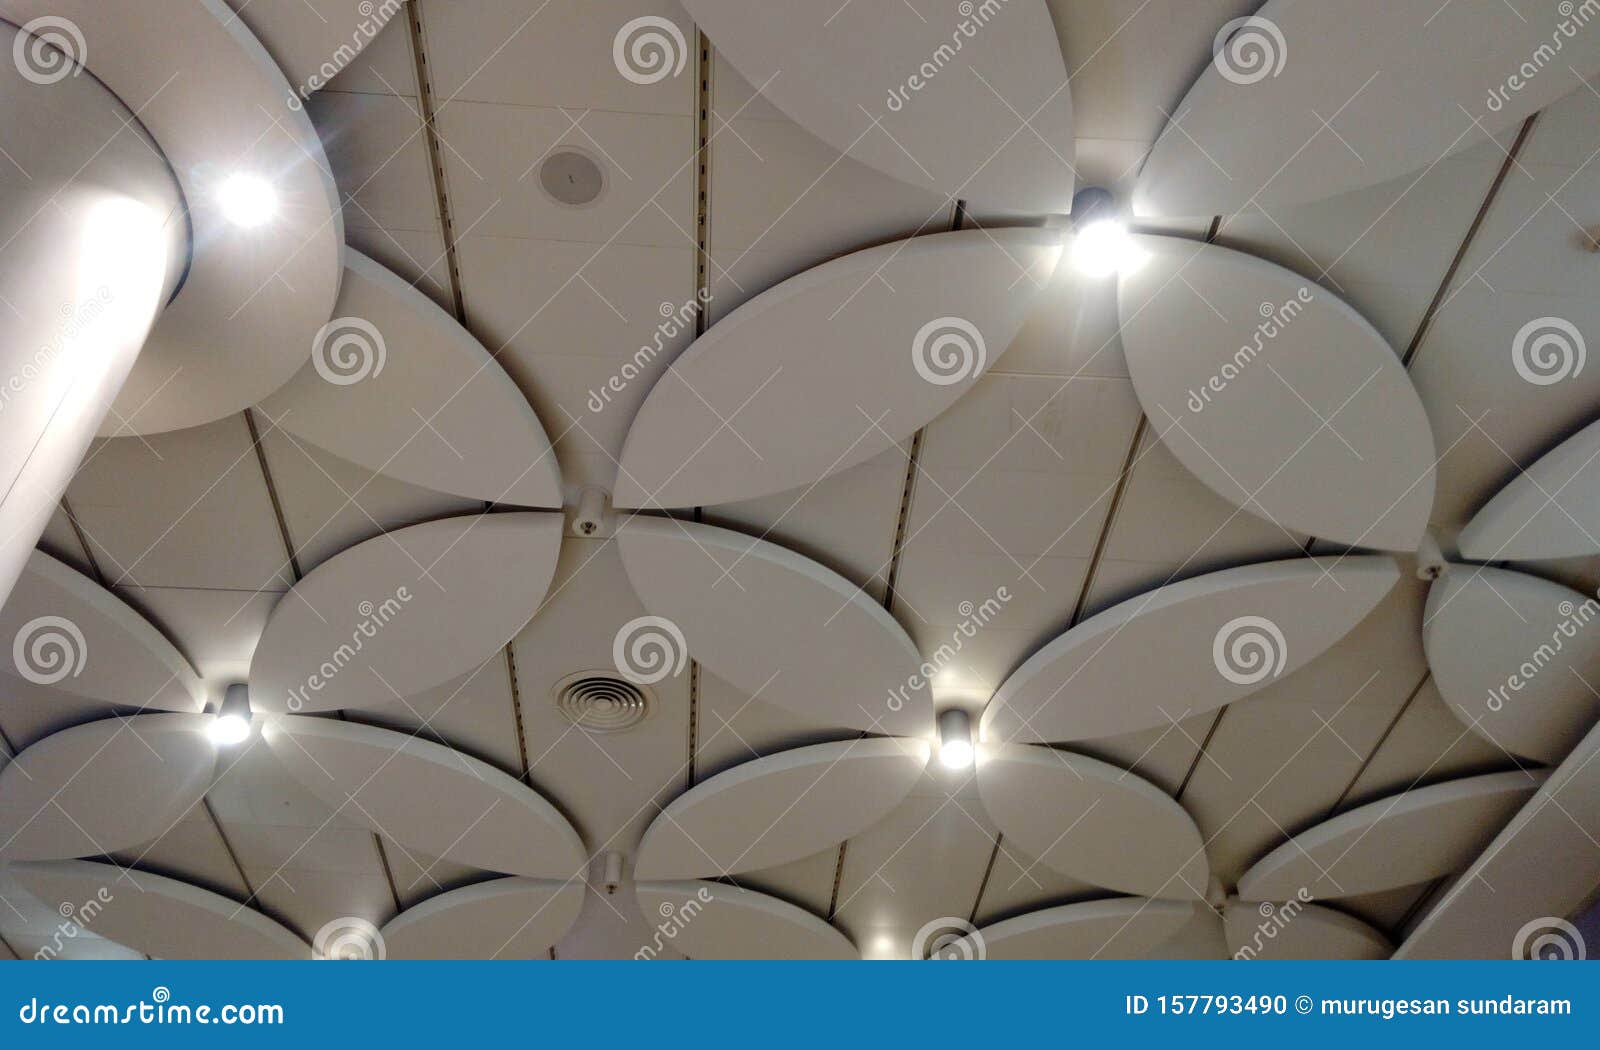 Gypsum False Ceiling With Flower Petal Design Interiors At Mumbai